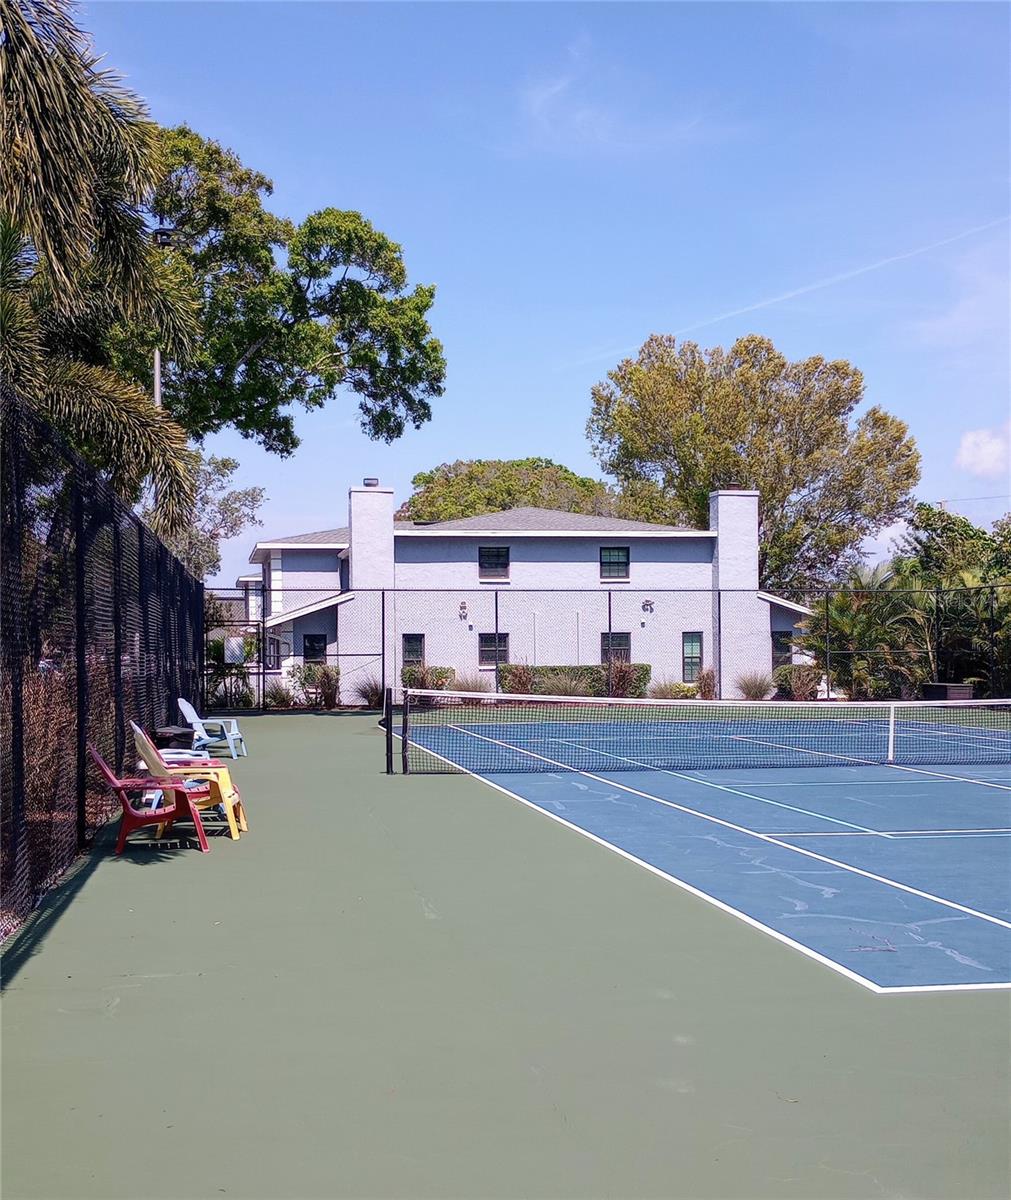 tennis court seating